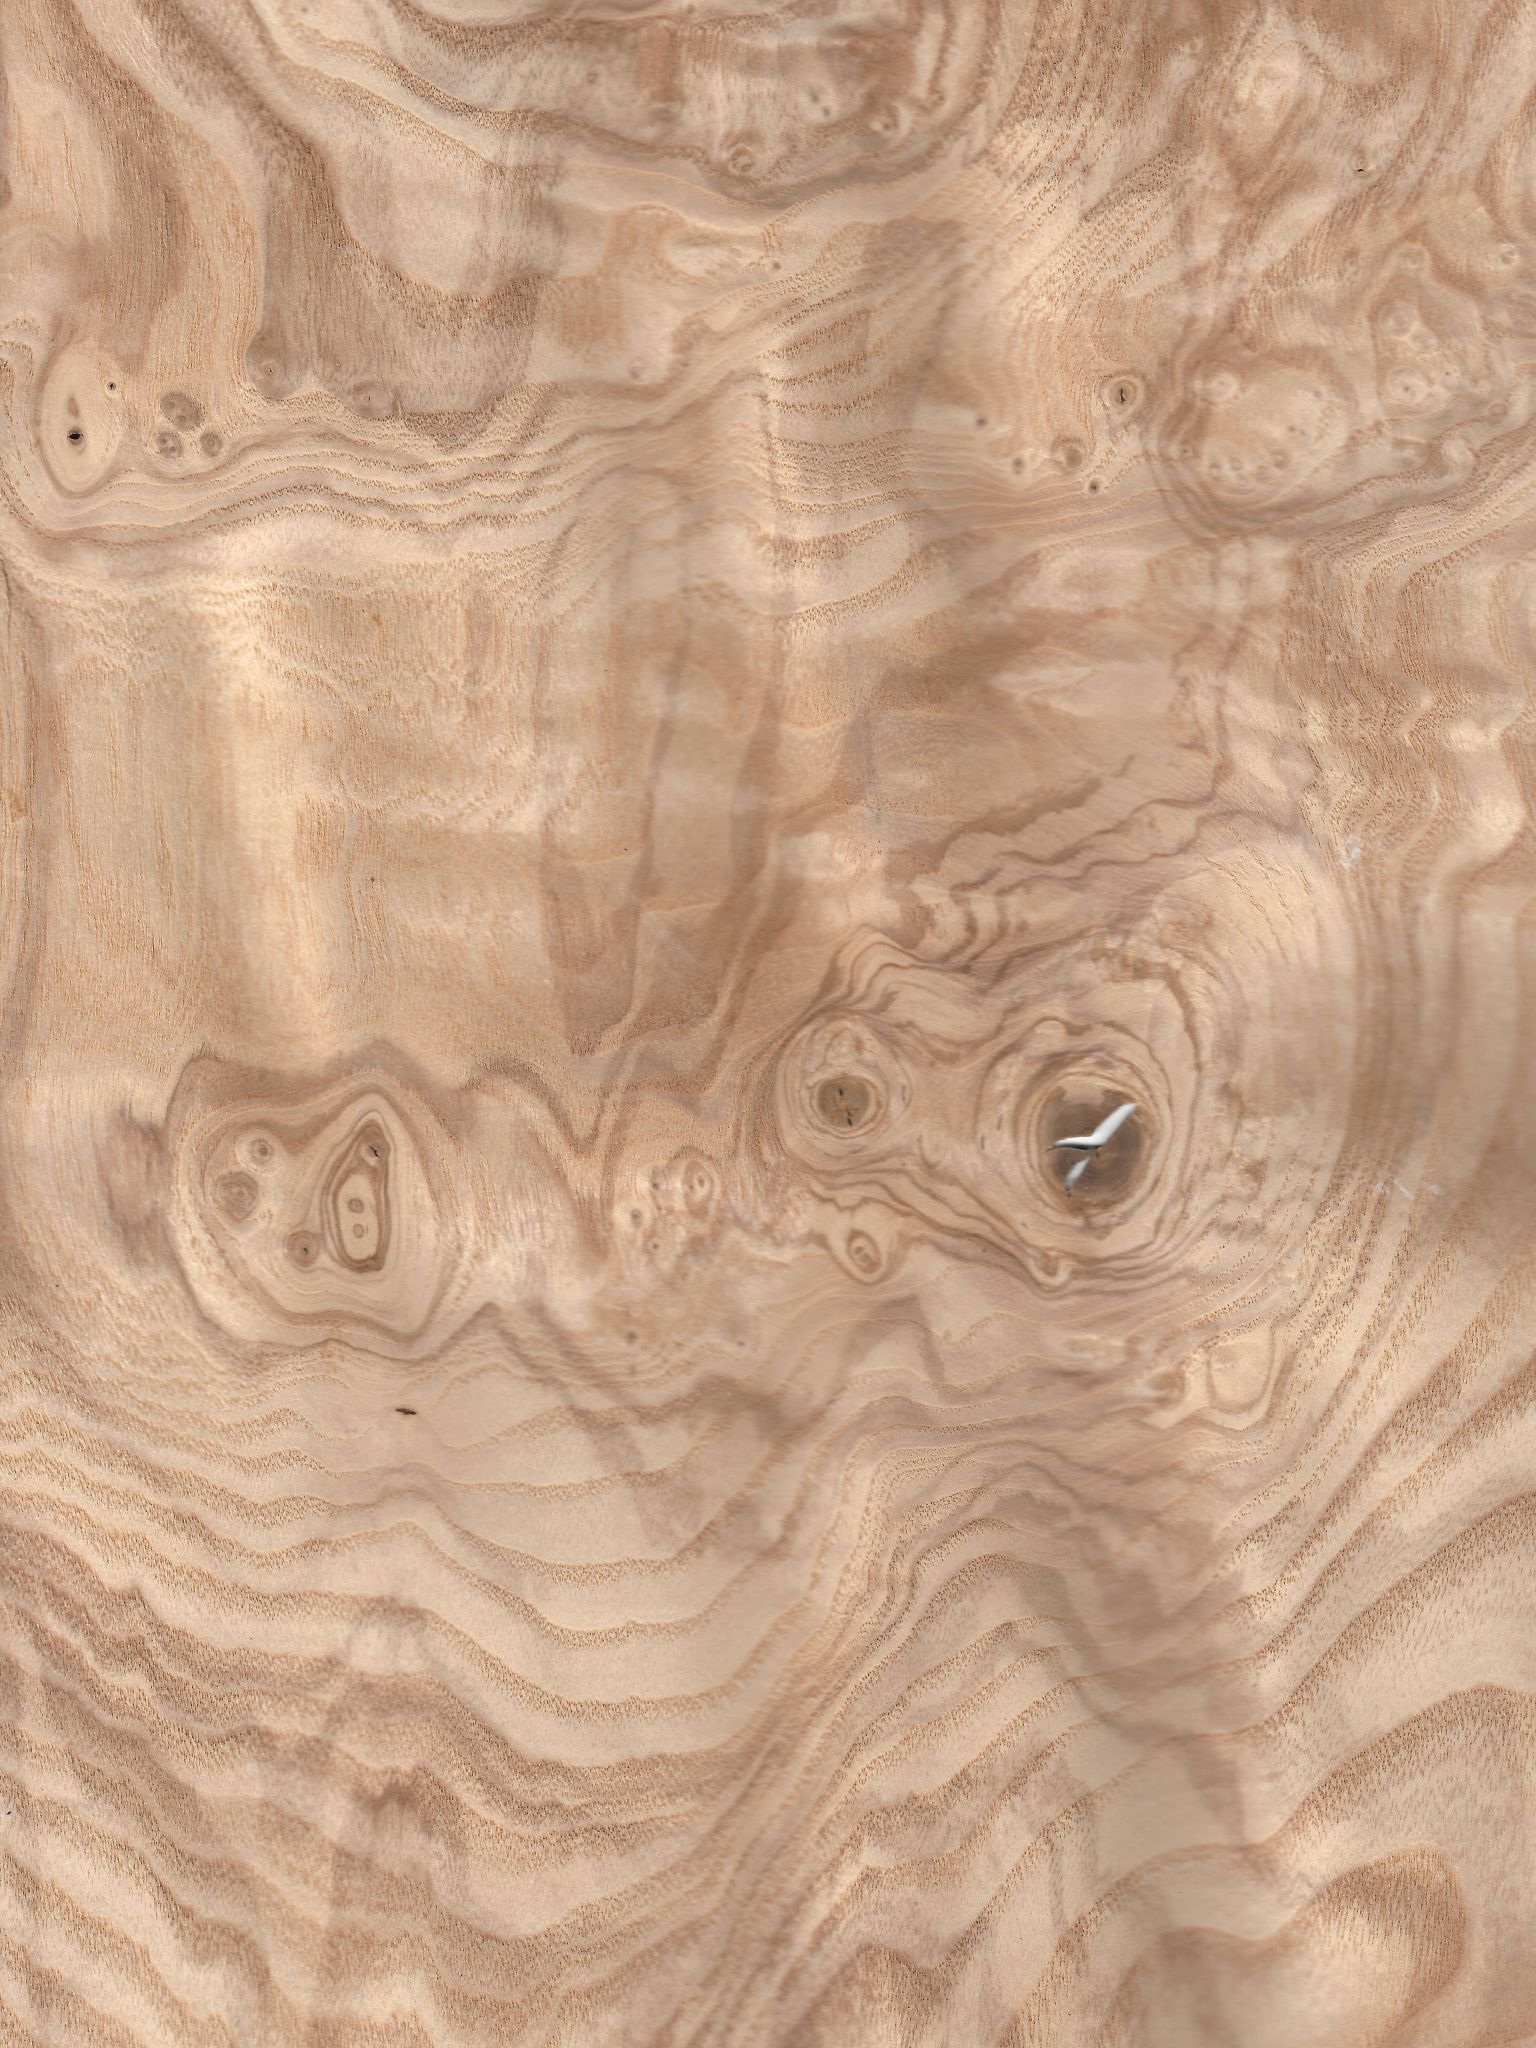 Olive Ash Burl wood veneer 8" x 12" with no backing raw veneer 1/42" thickness 